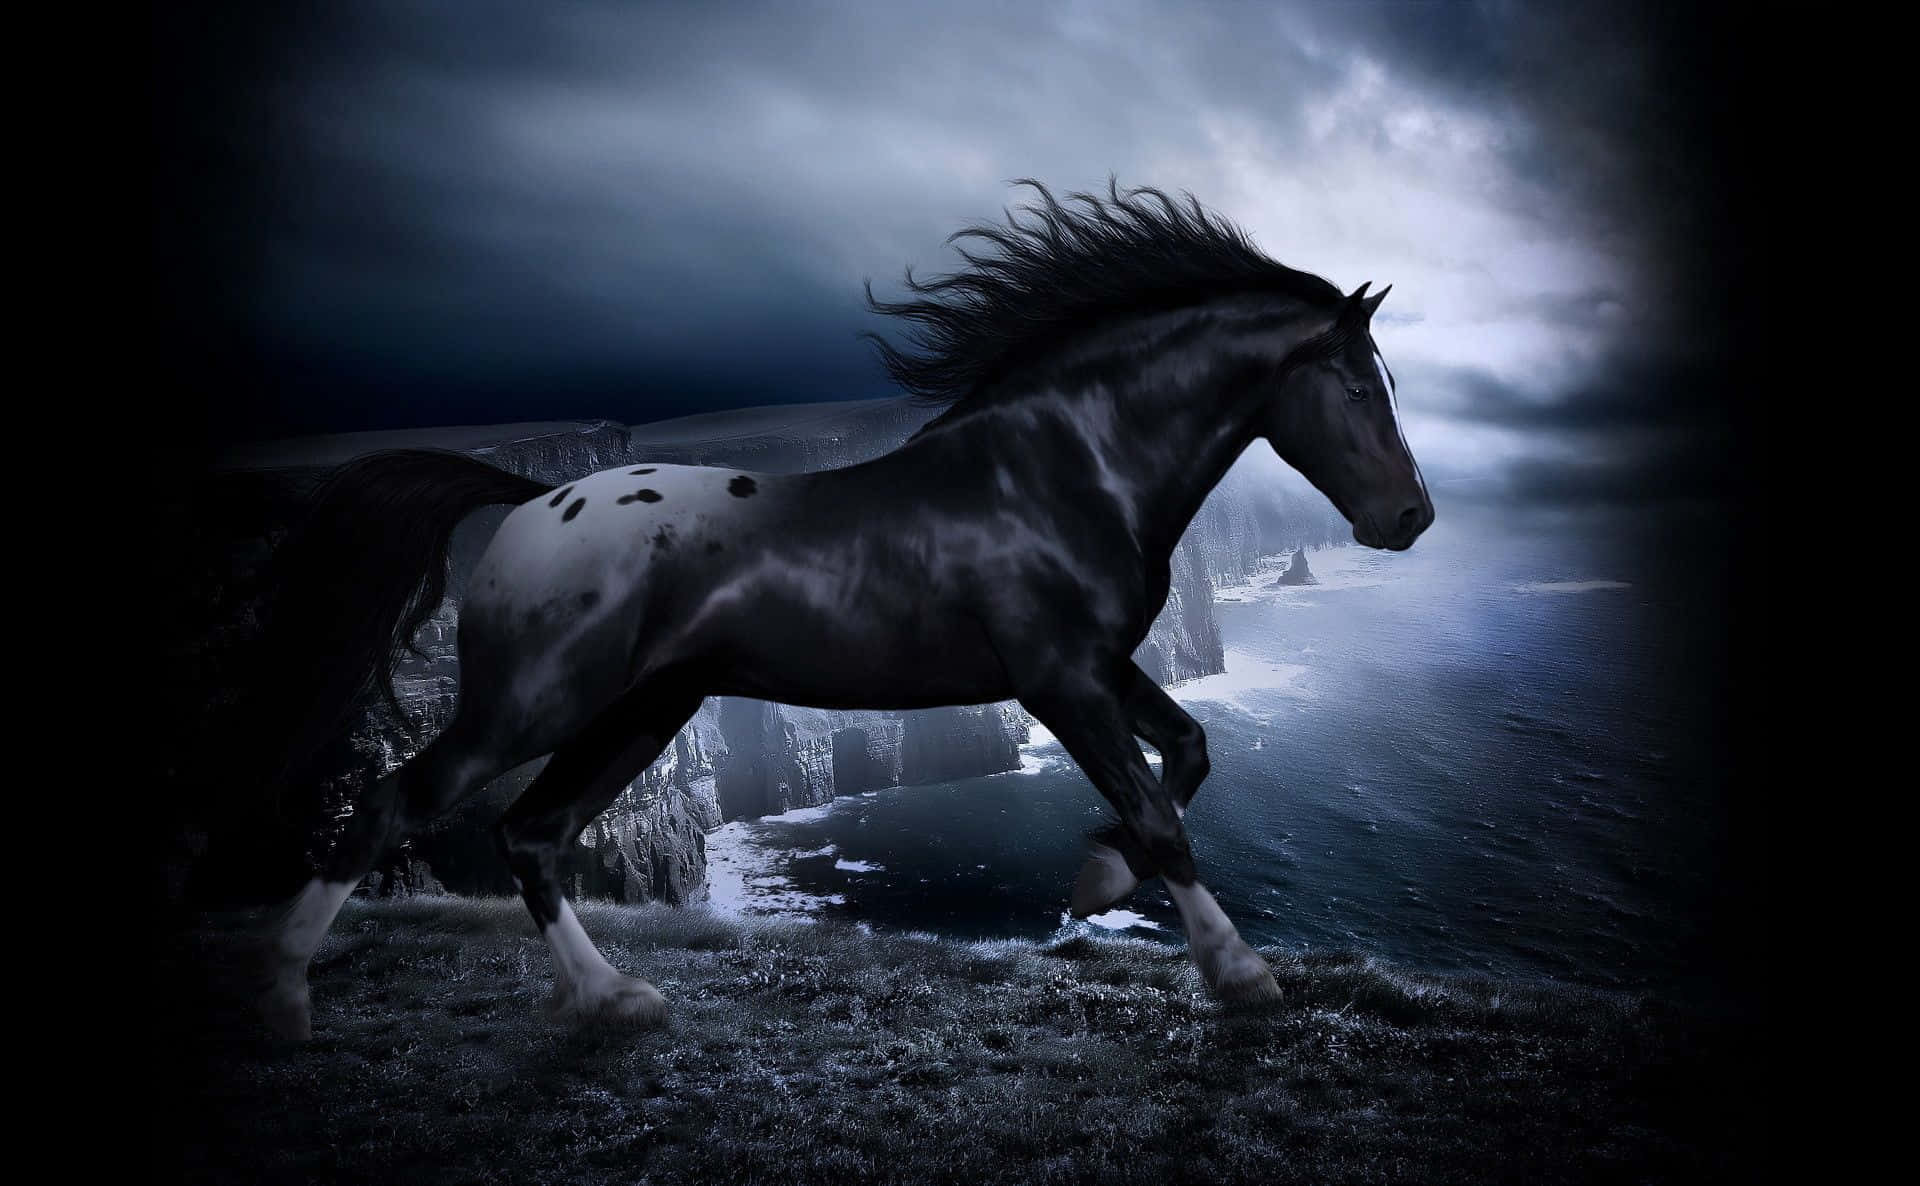 Black And White Horse Dark Digital Art Picture